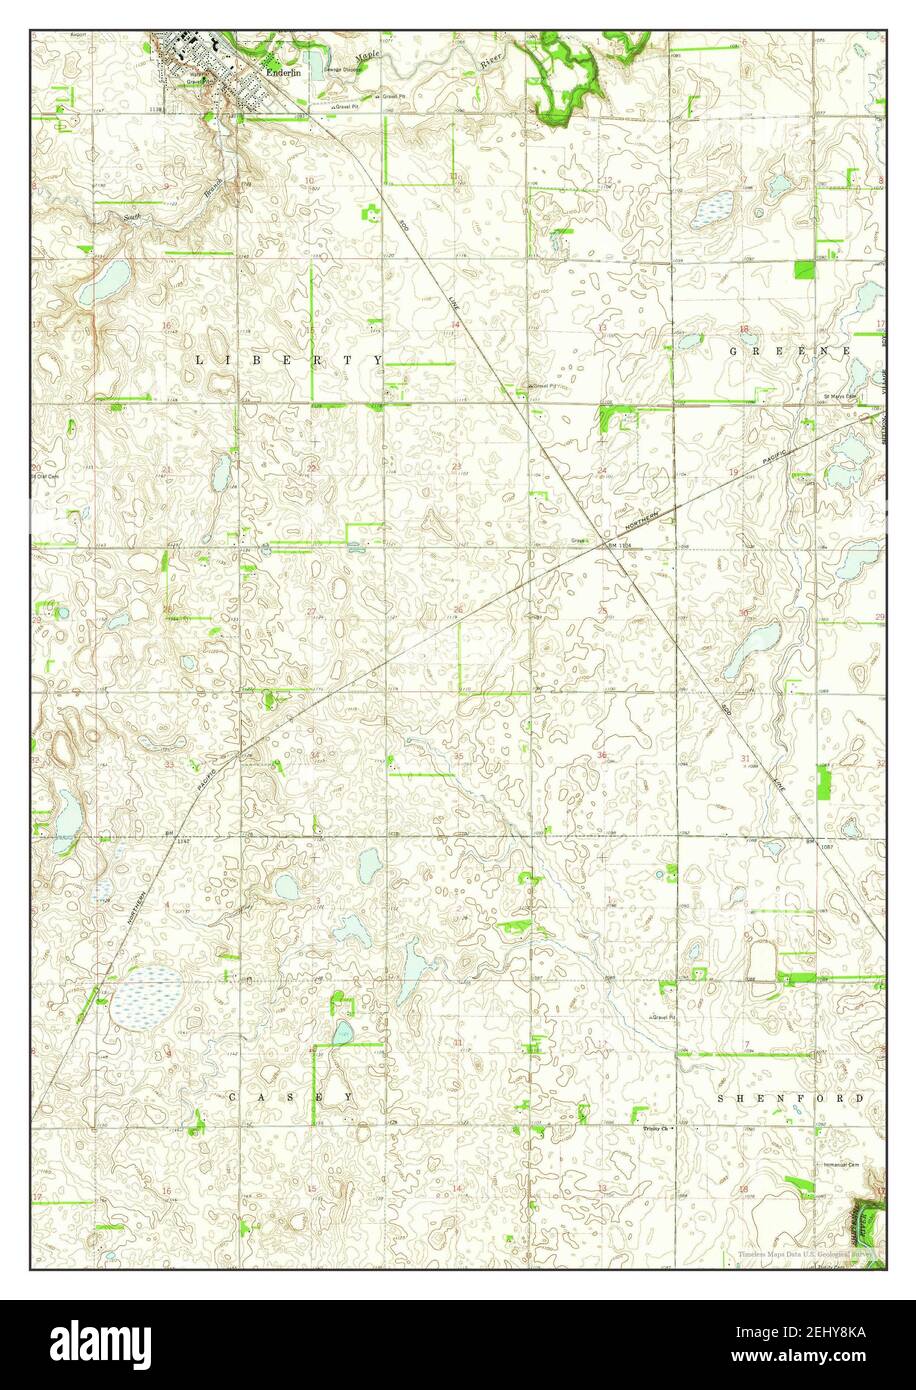 Enderlin South, North Dakota, map 1960, 1:24000, United States of America  by Timeless Maps, data U.S. Geological Survey Stock Photo - Alamy